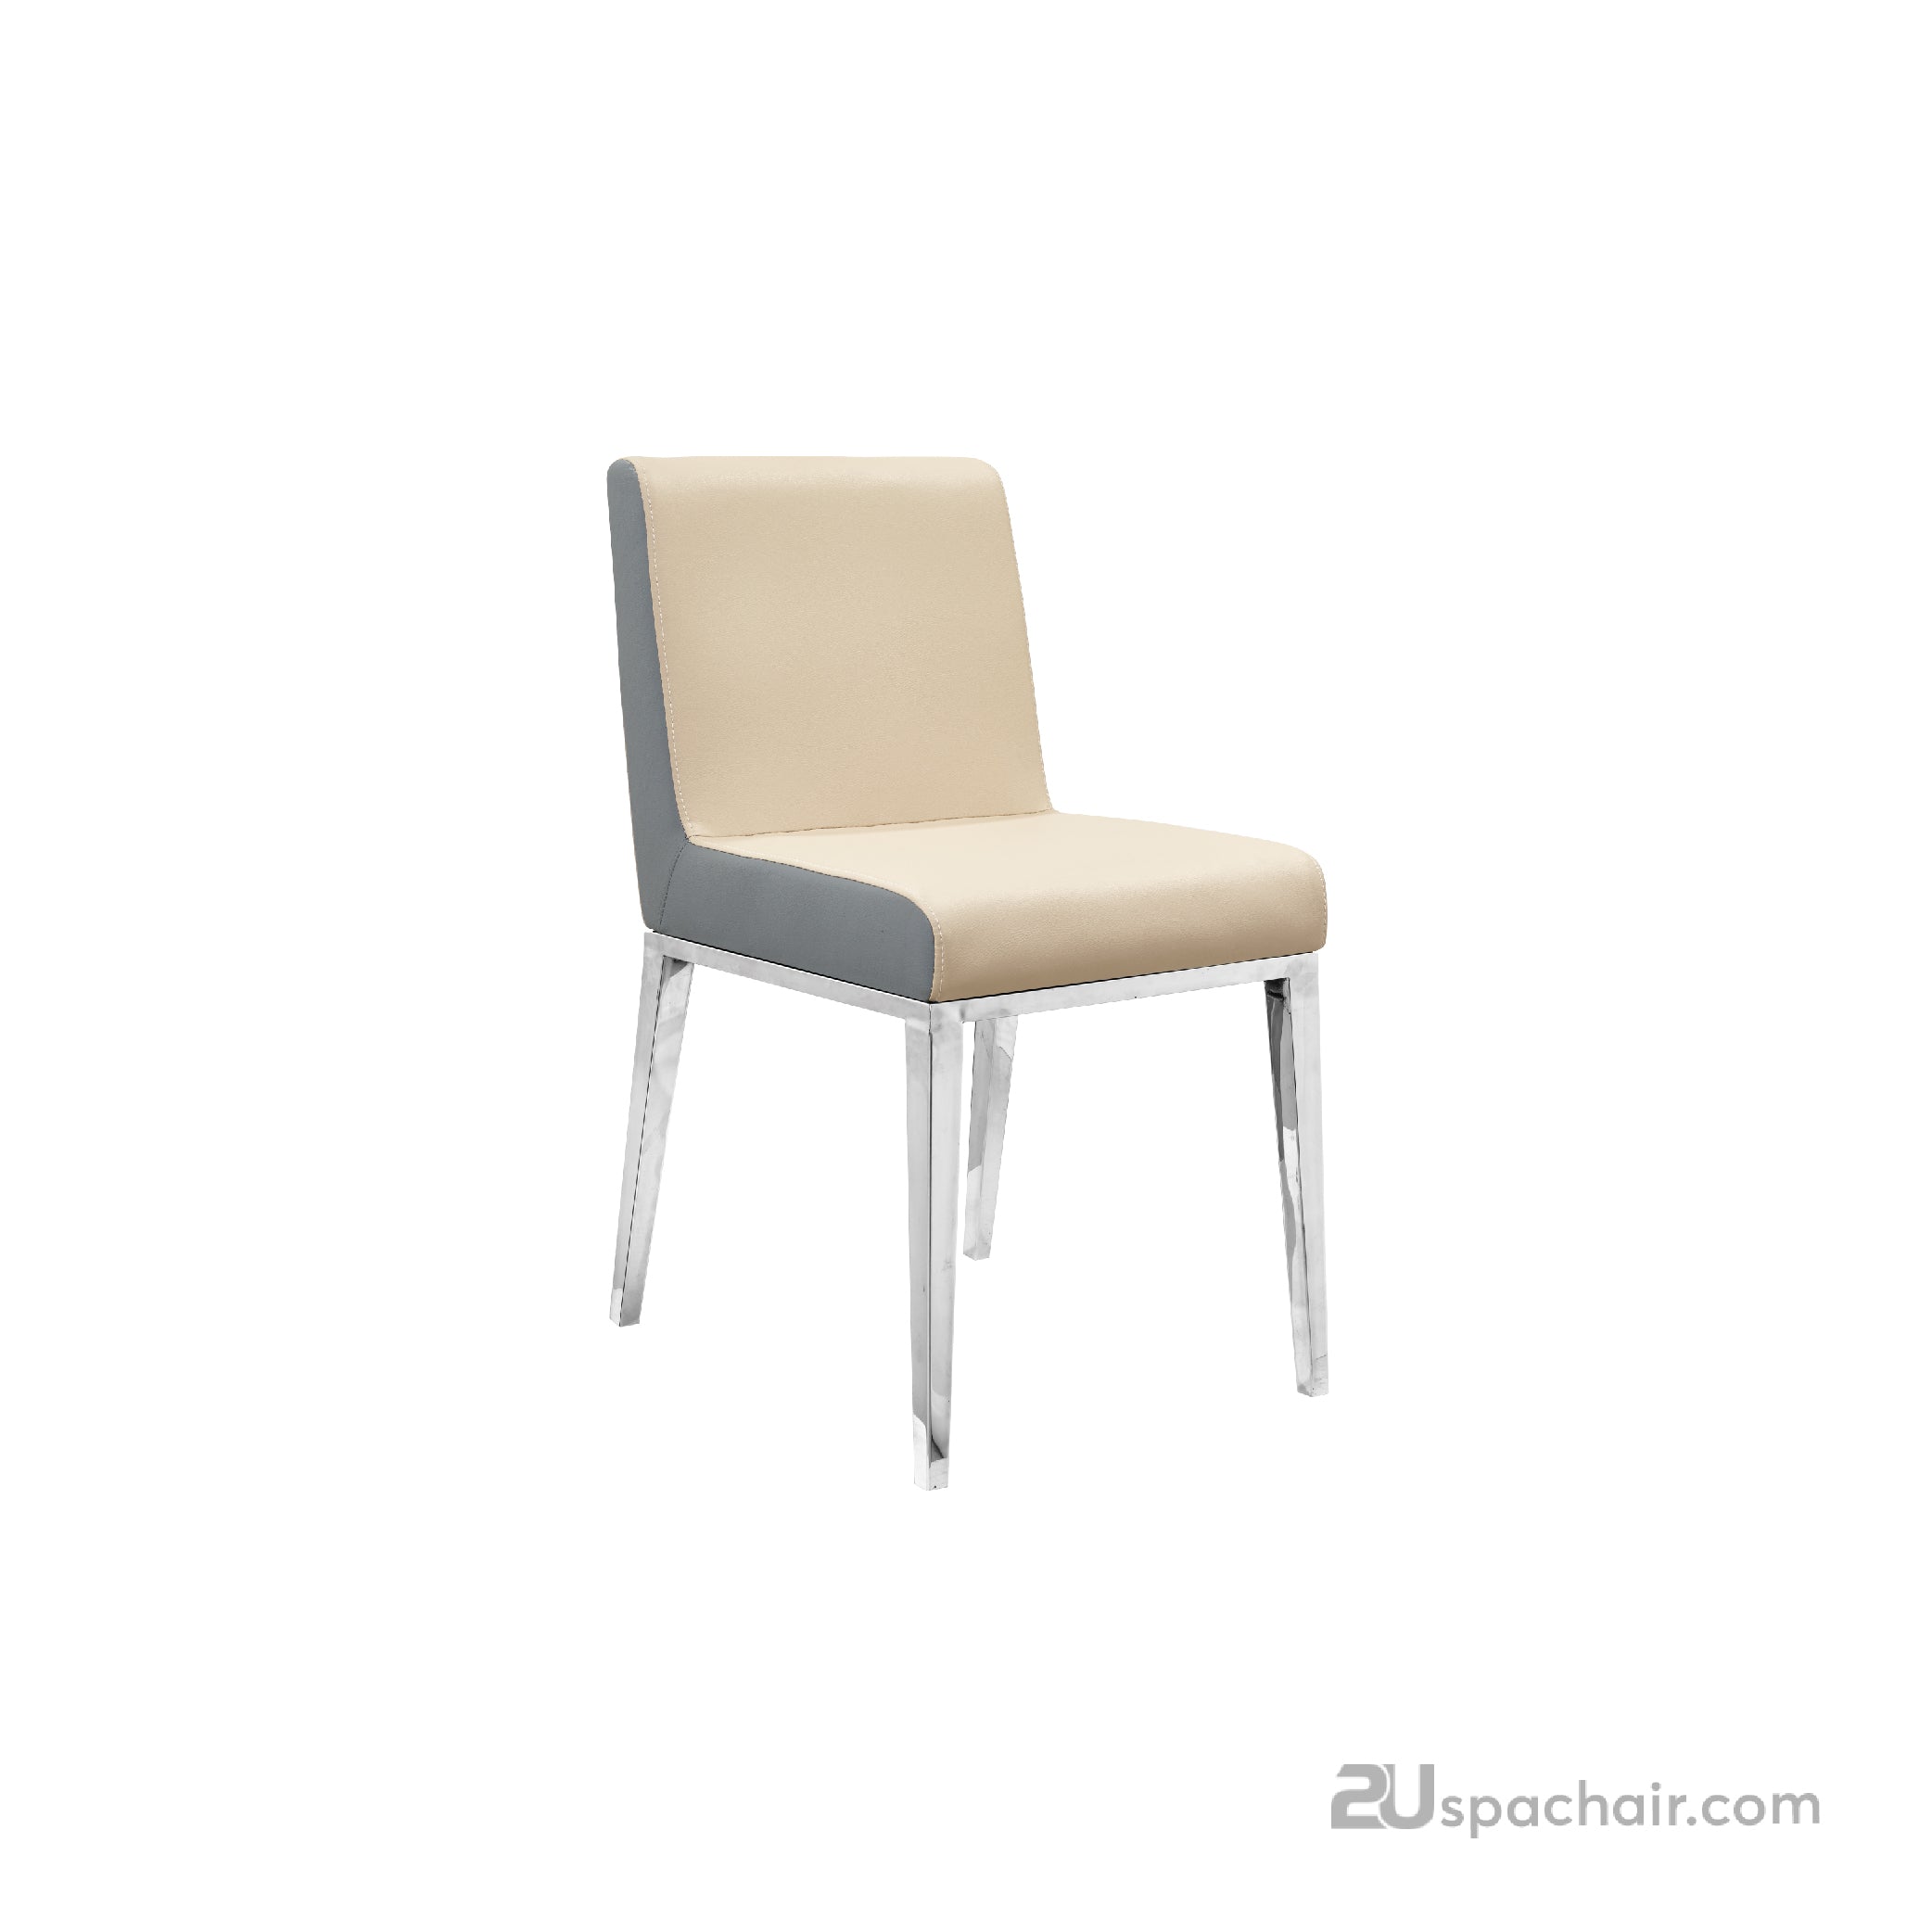 2U Spa Chair